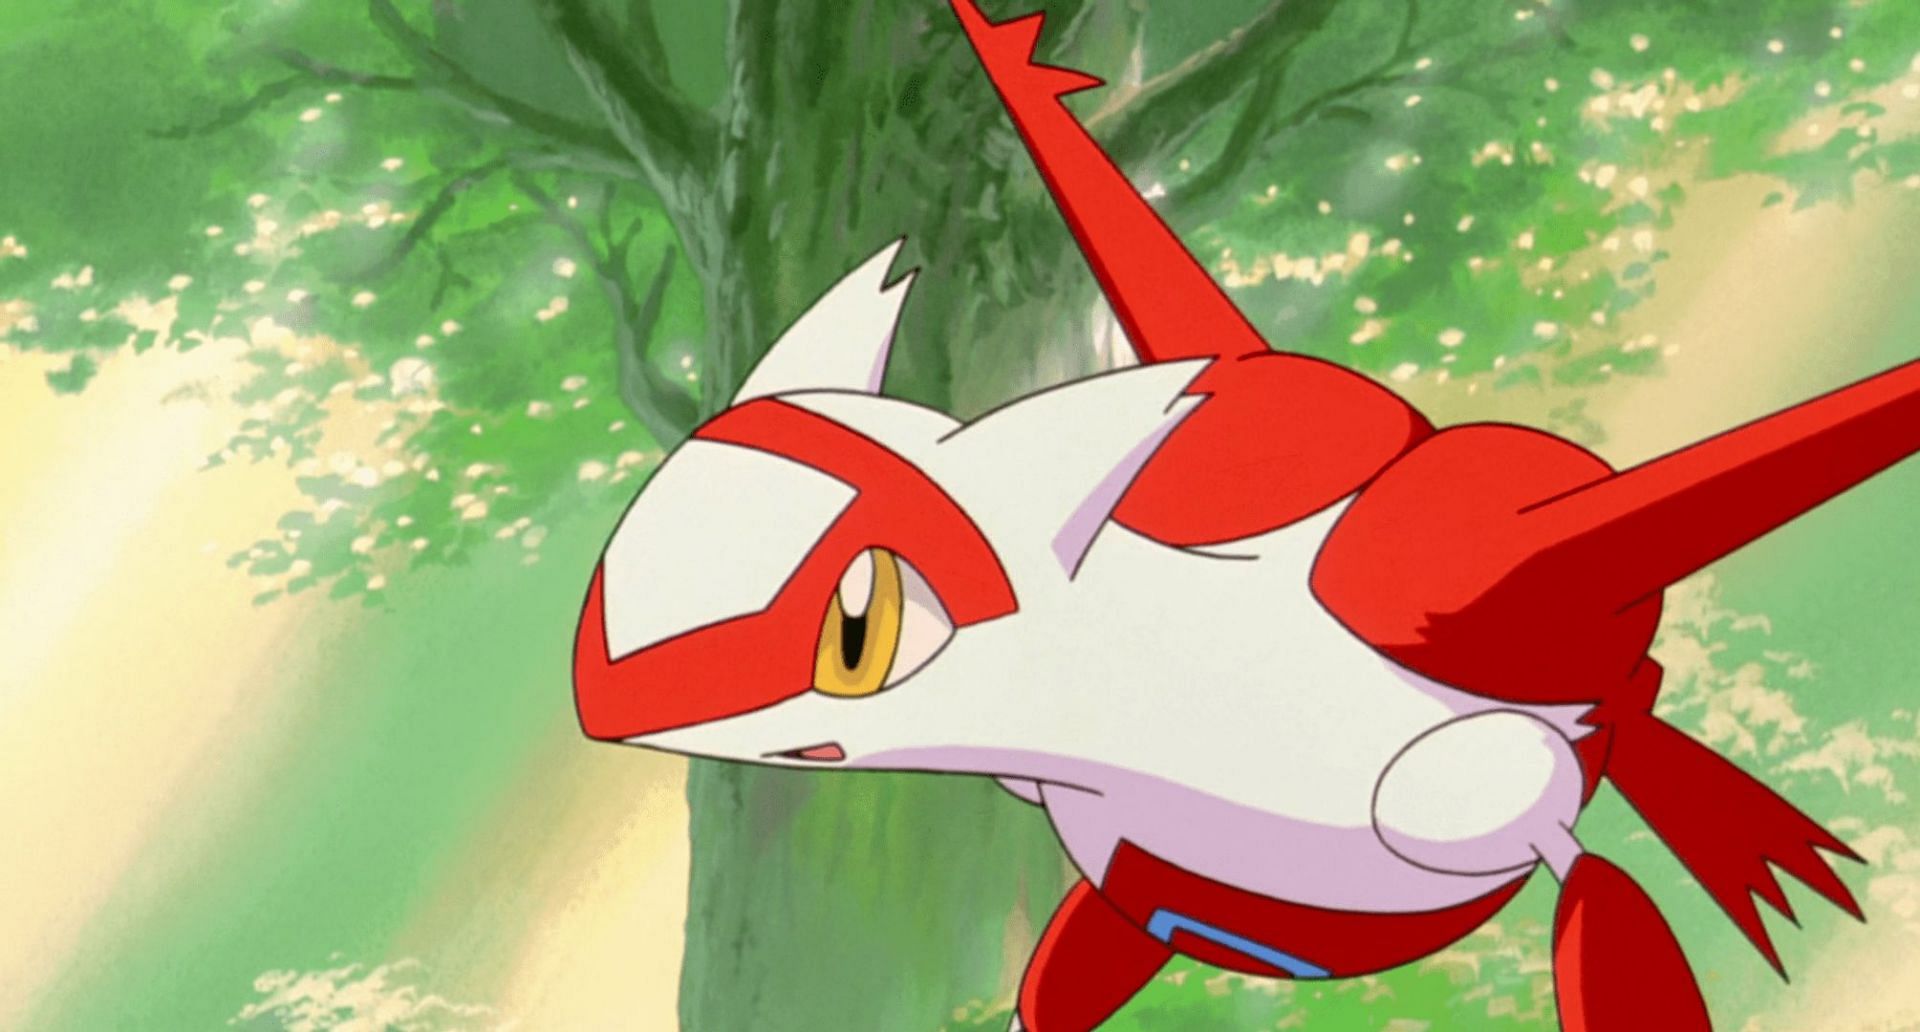 Latias as it appears in the fifth Pokemon movie (Image via The Pokemon Company)